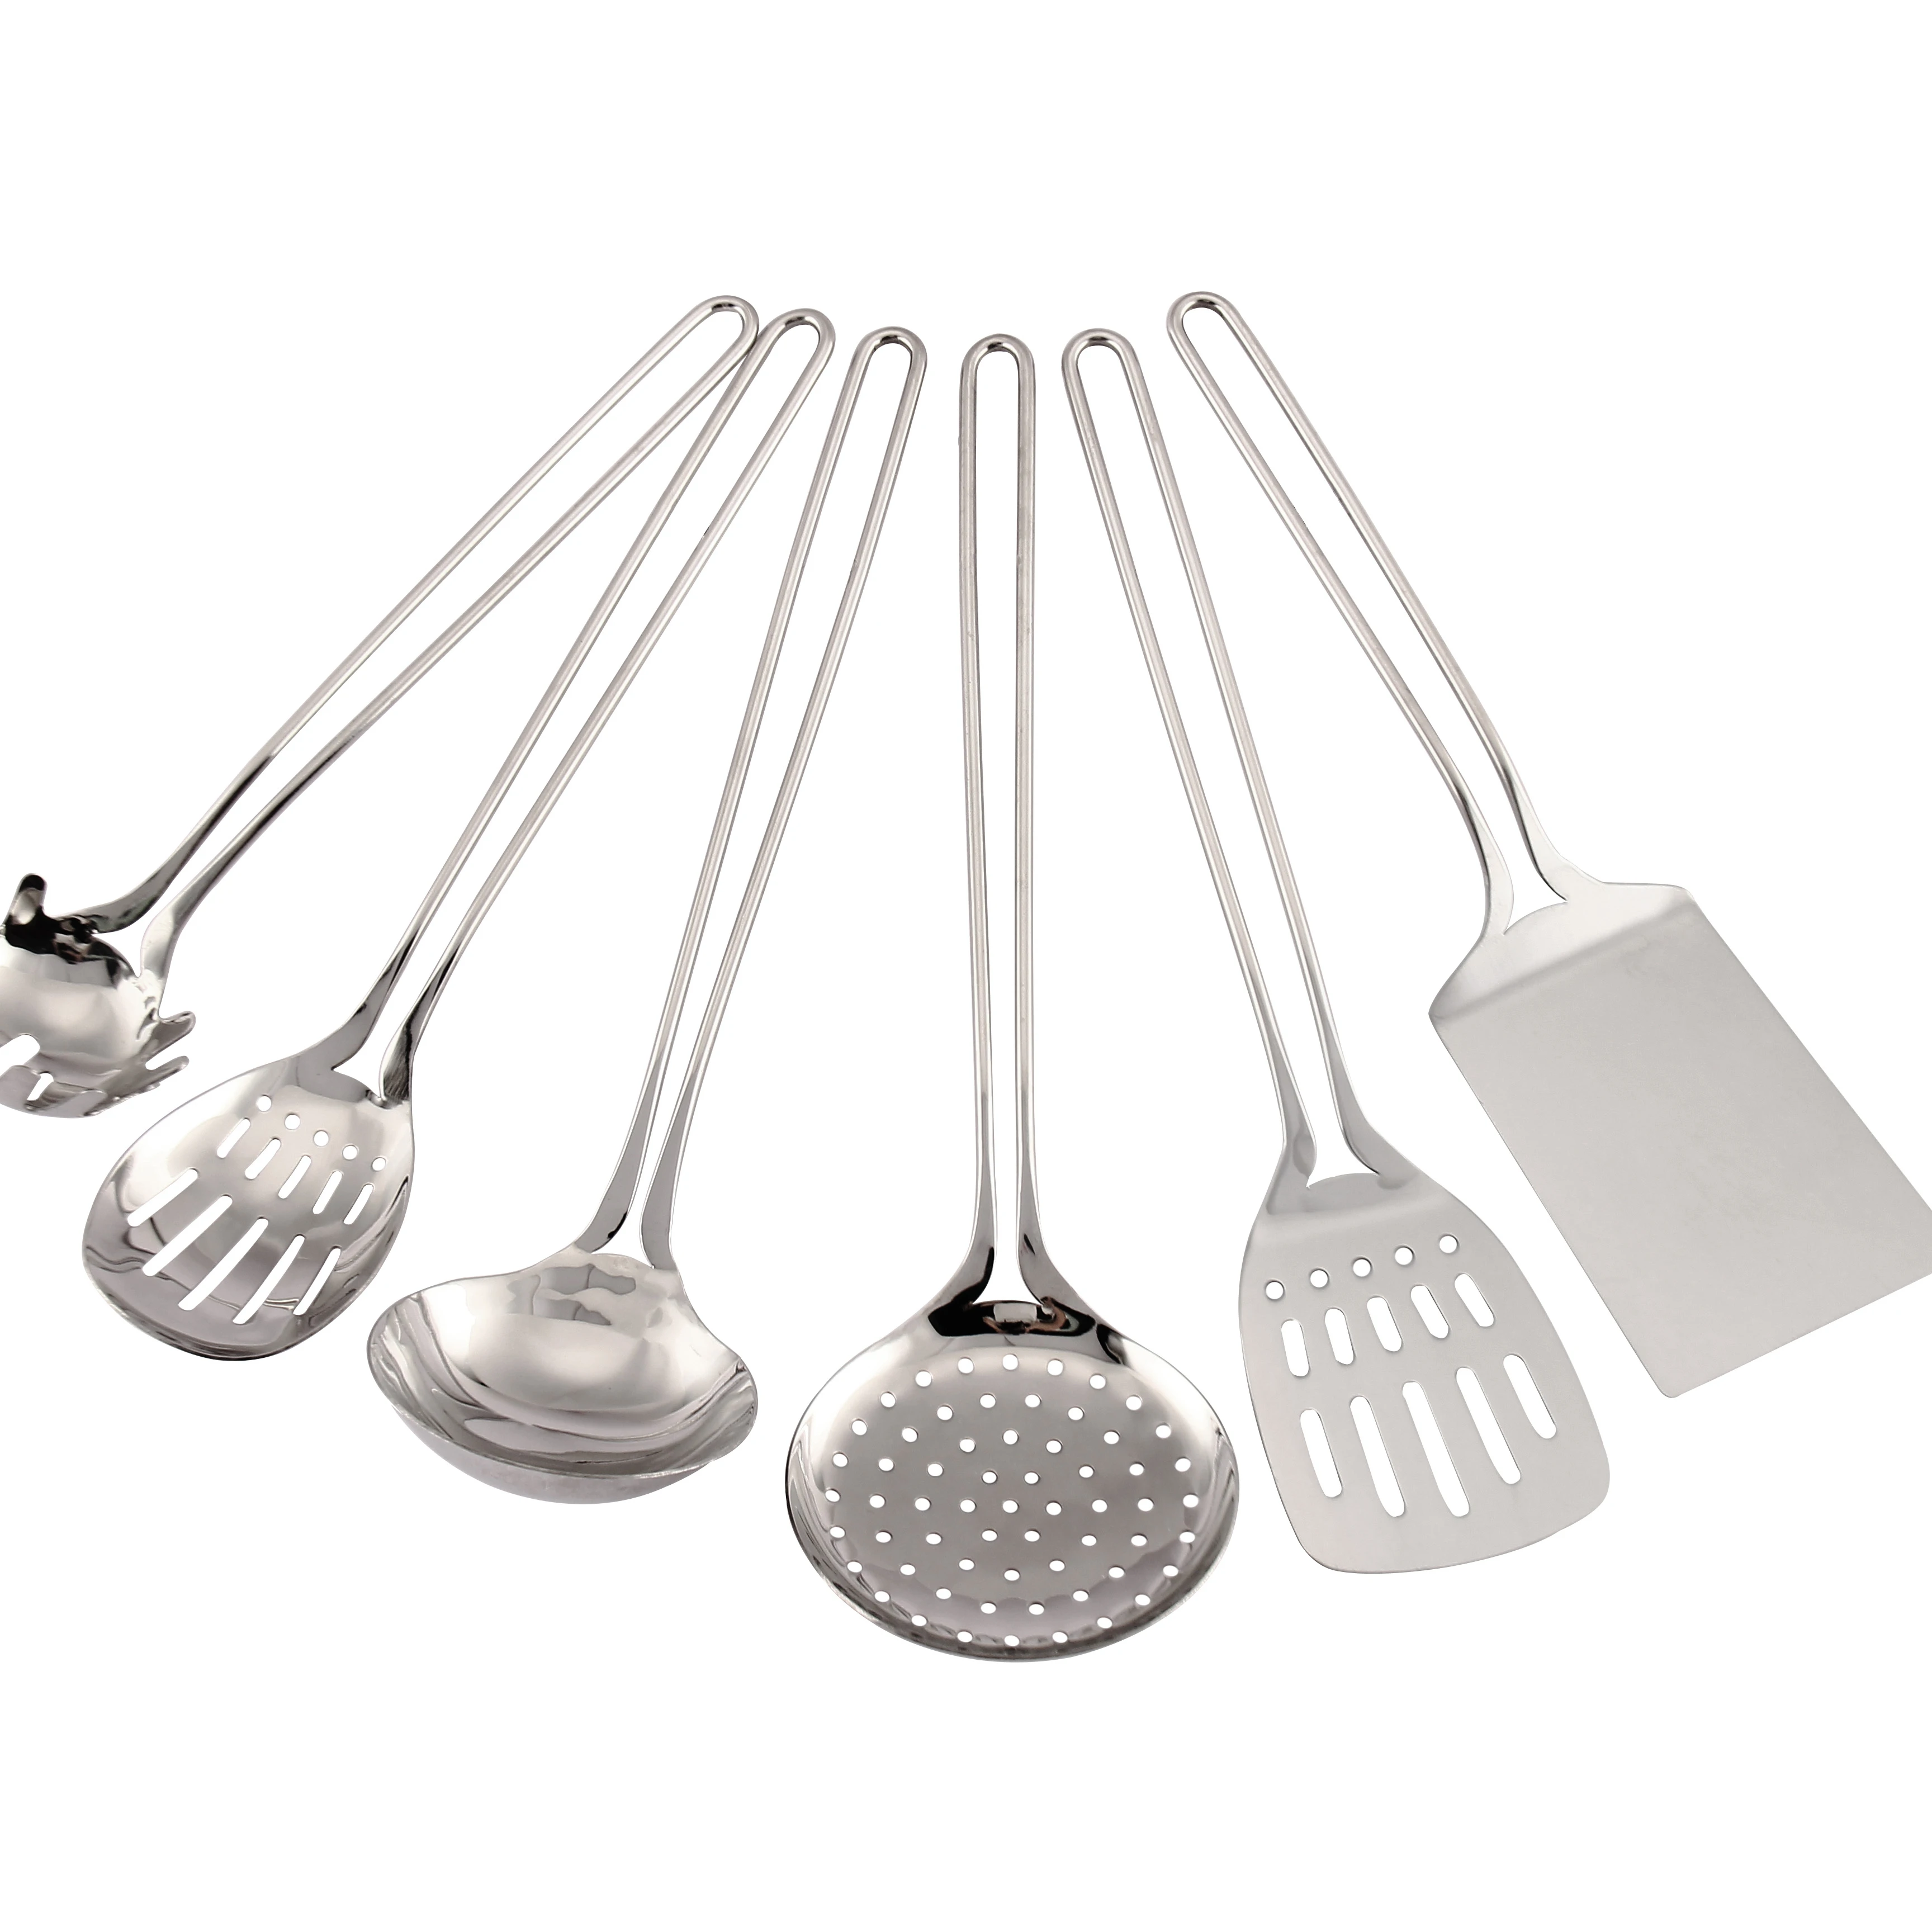 High Grade 6pcs stainless steel kitchen tools , kitchen utensils set